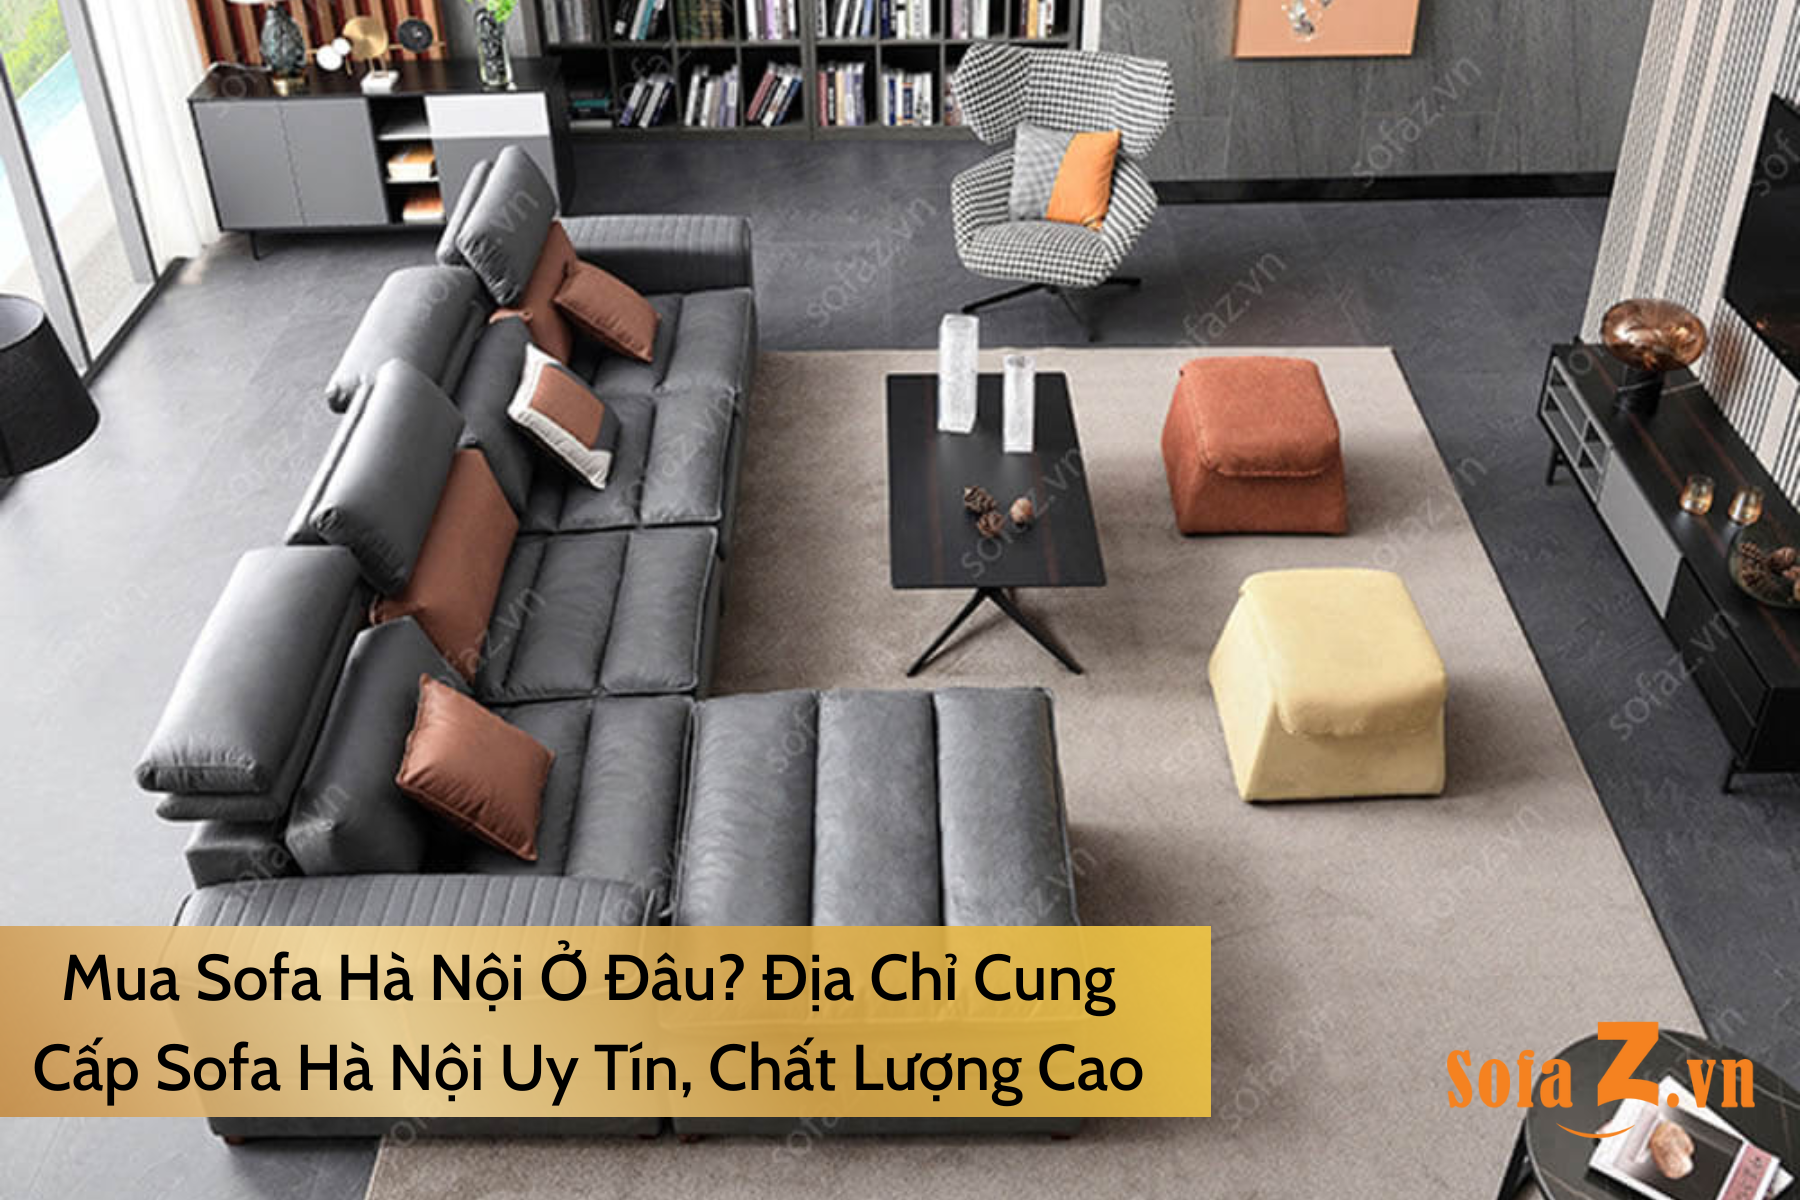 mua-sofa-ha-noi-o-dau-dia-chi-cung-cap-sofa-ha-noi-uy-tin-chat-luong-cao.html